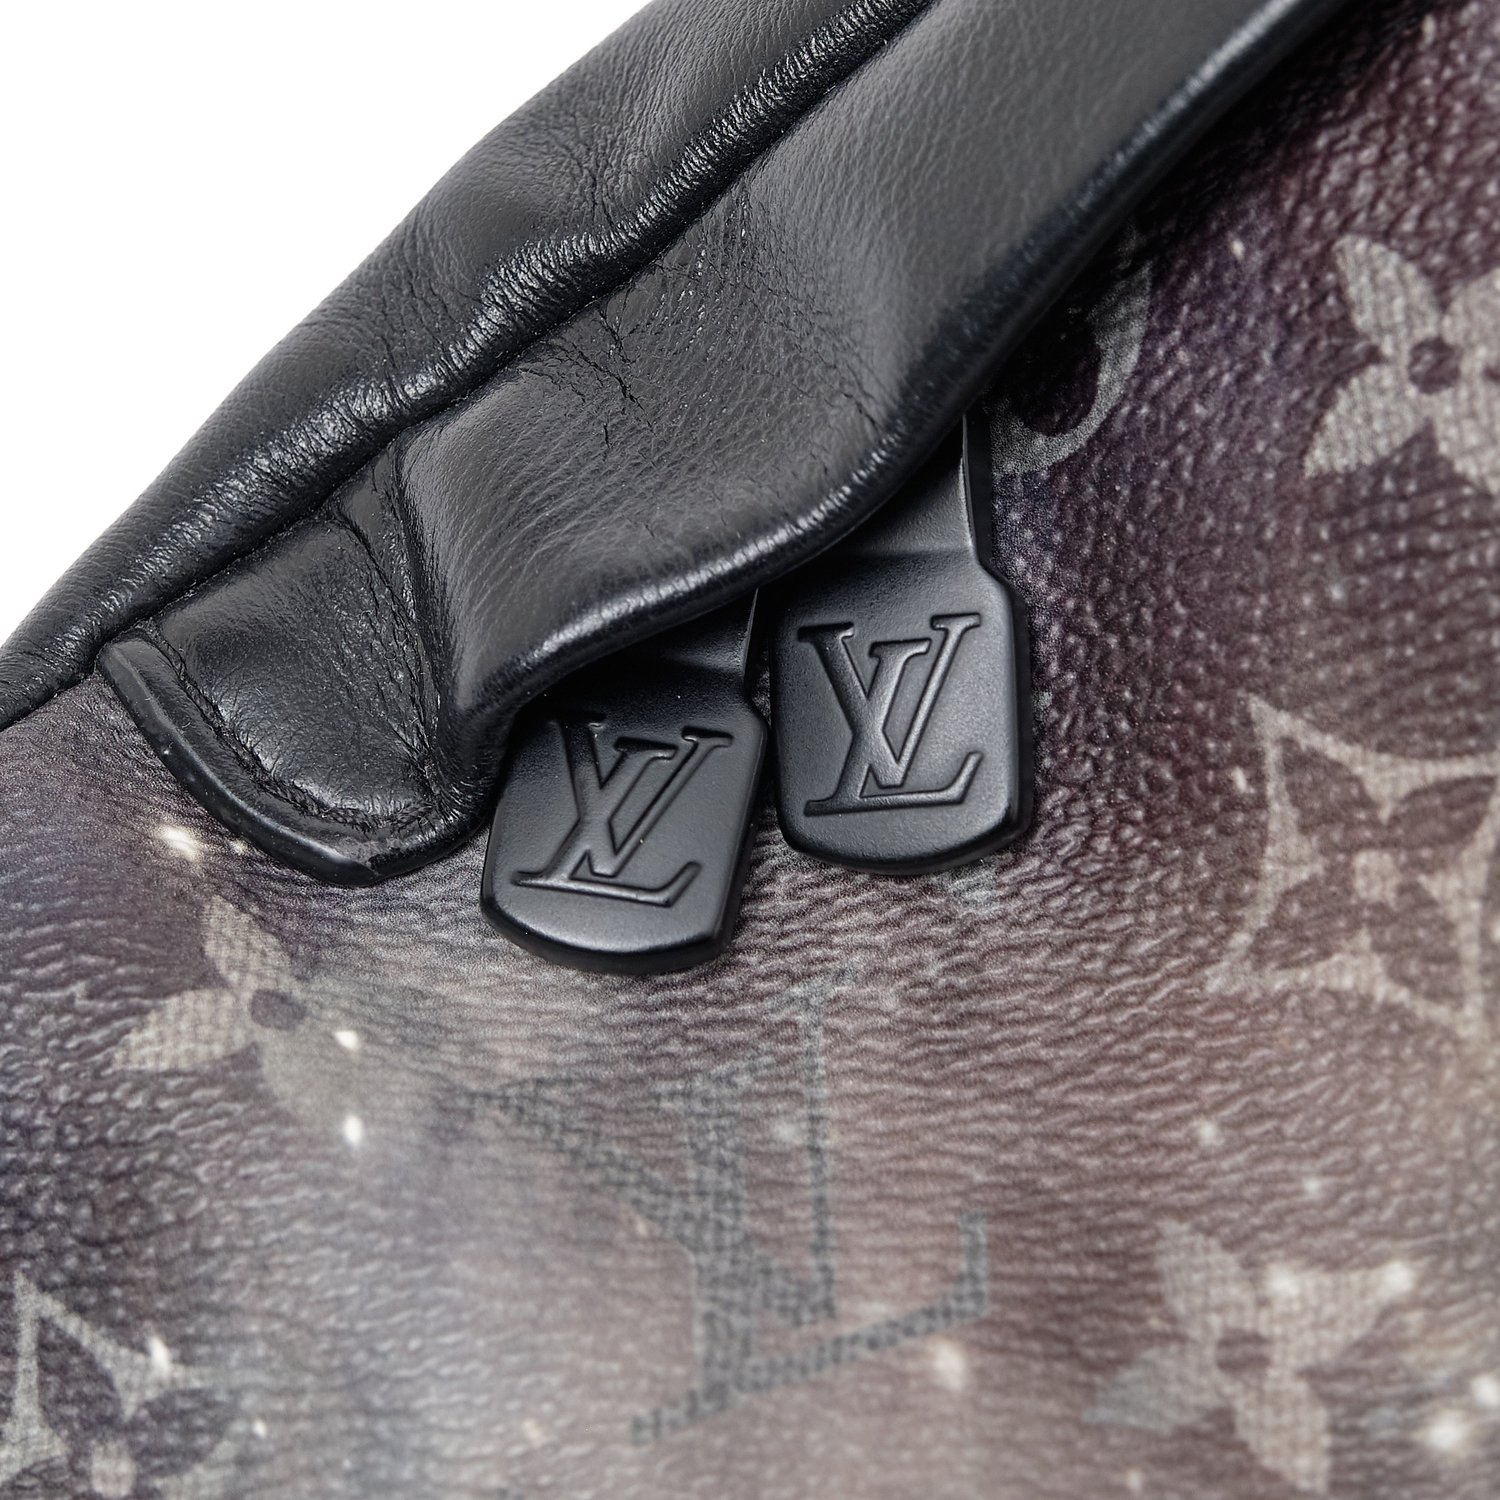 Louis Vuitton Monogram bum bag Galaxy